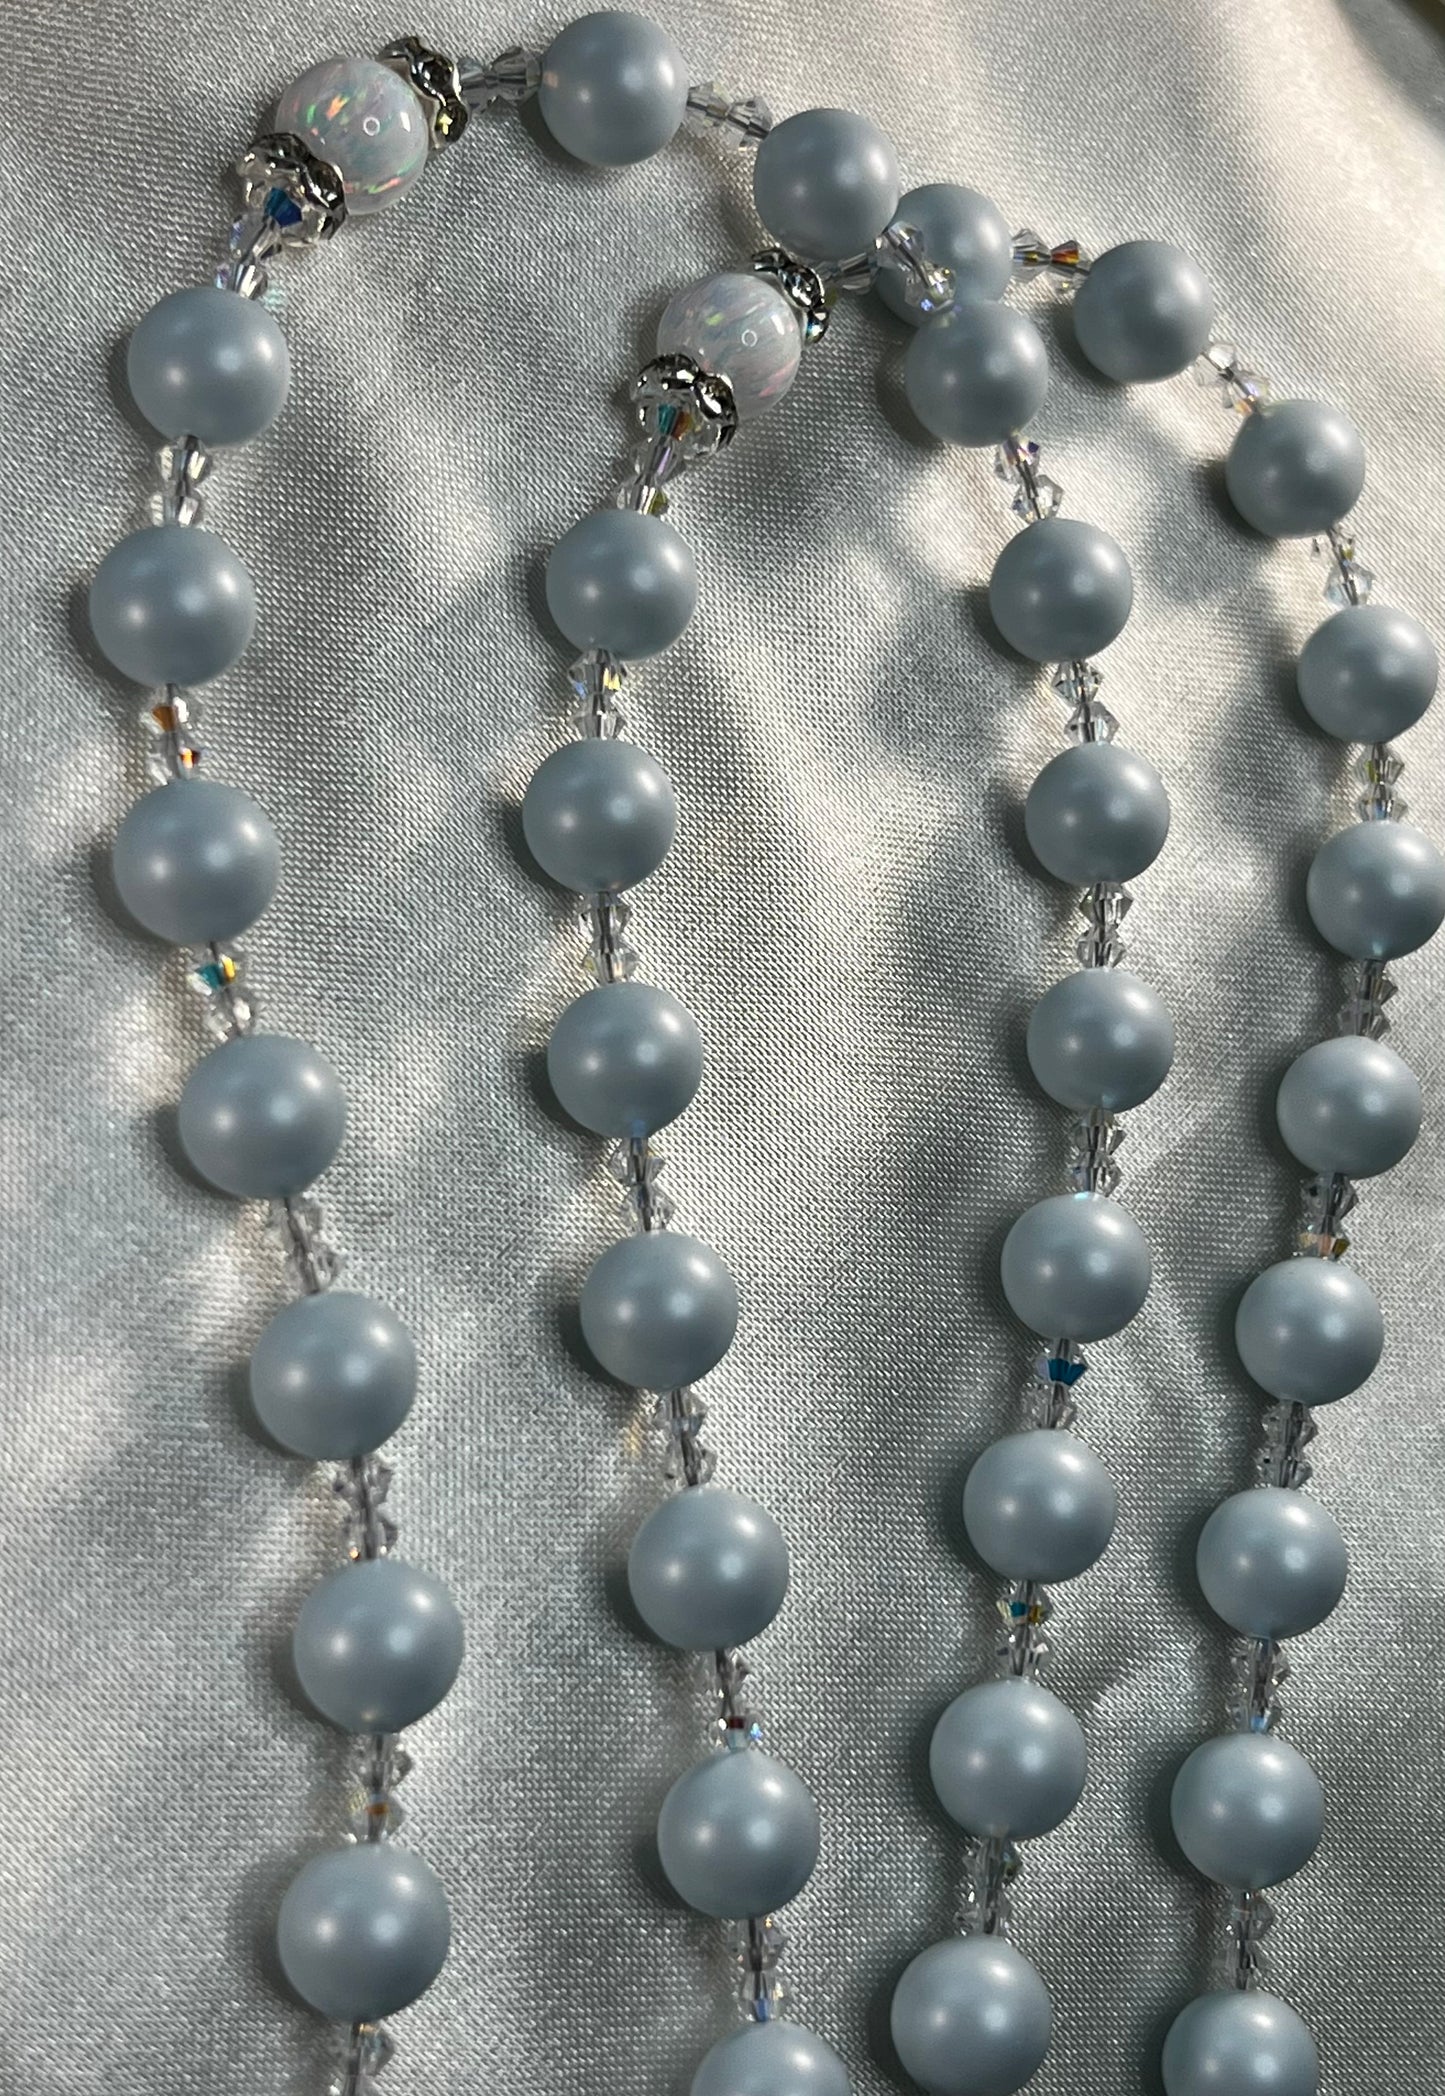 Swarovski Pastel Blue Pearls with Swarovski Crystal spacers